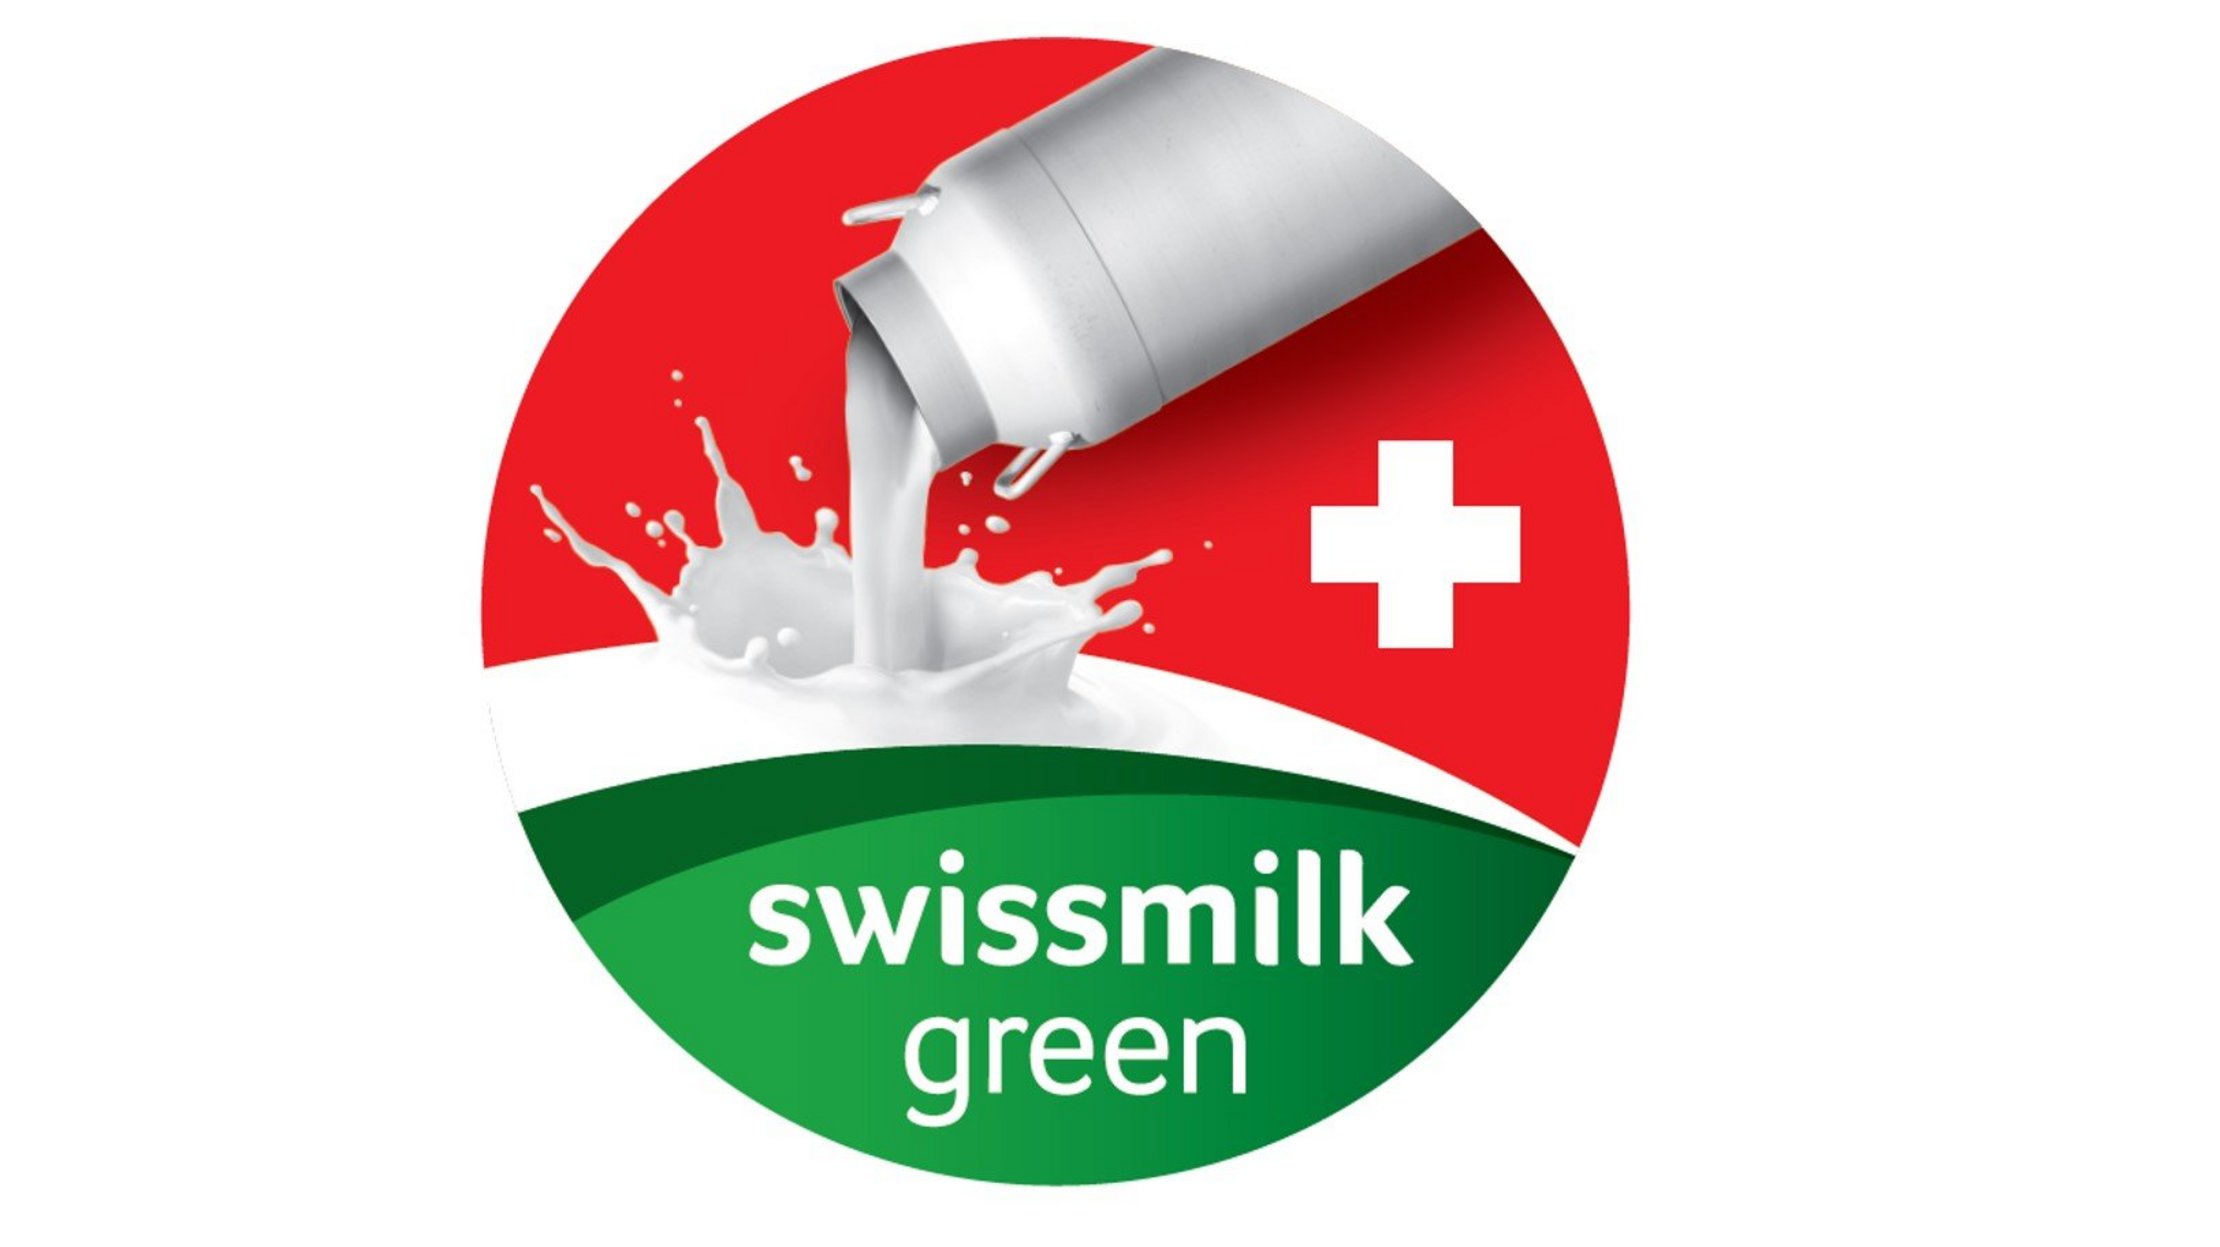 Swissmilk_green_logo.jpeg